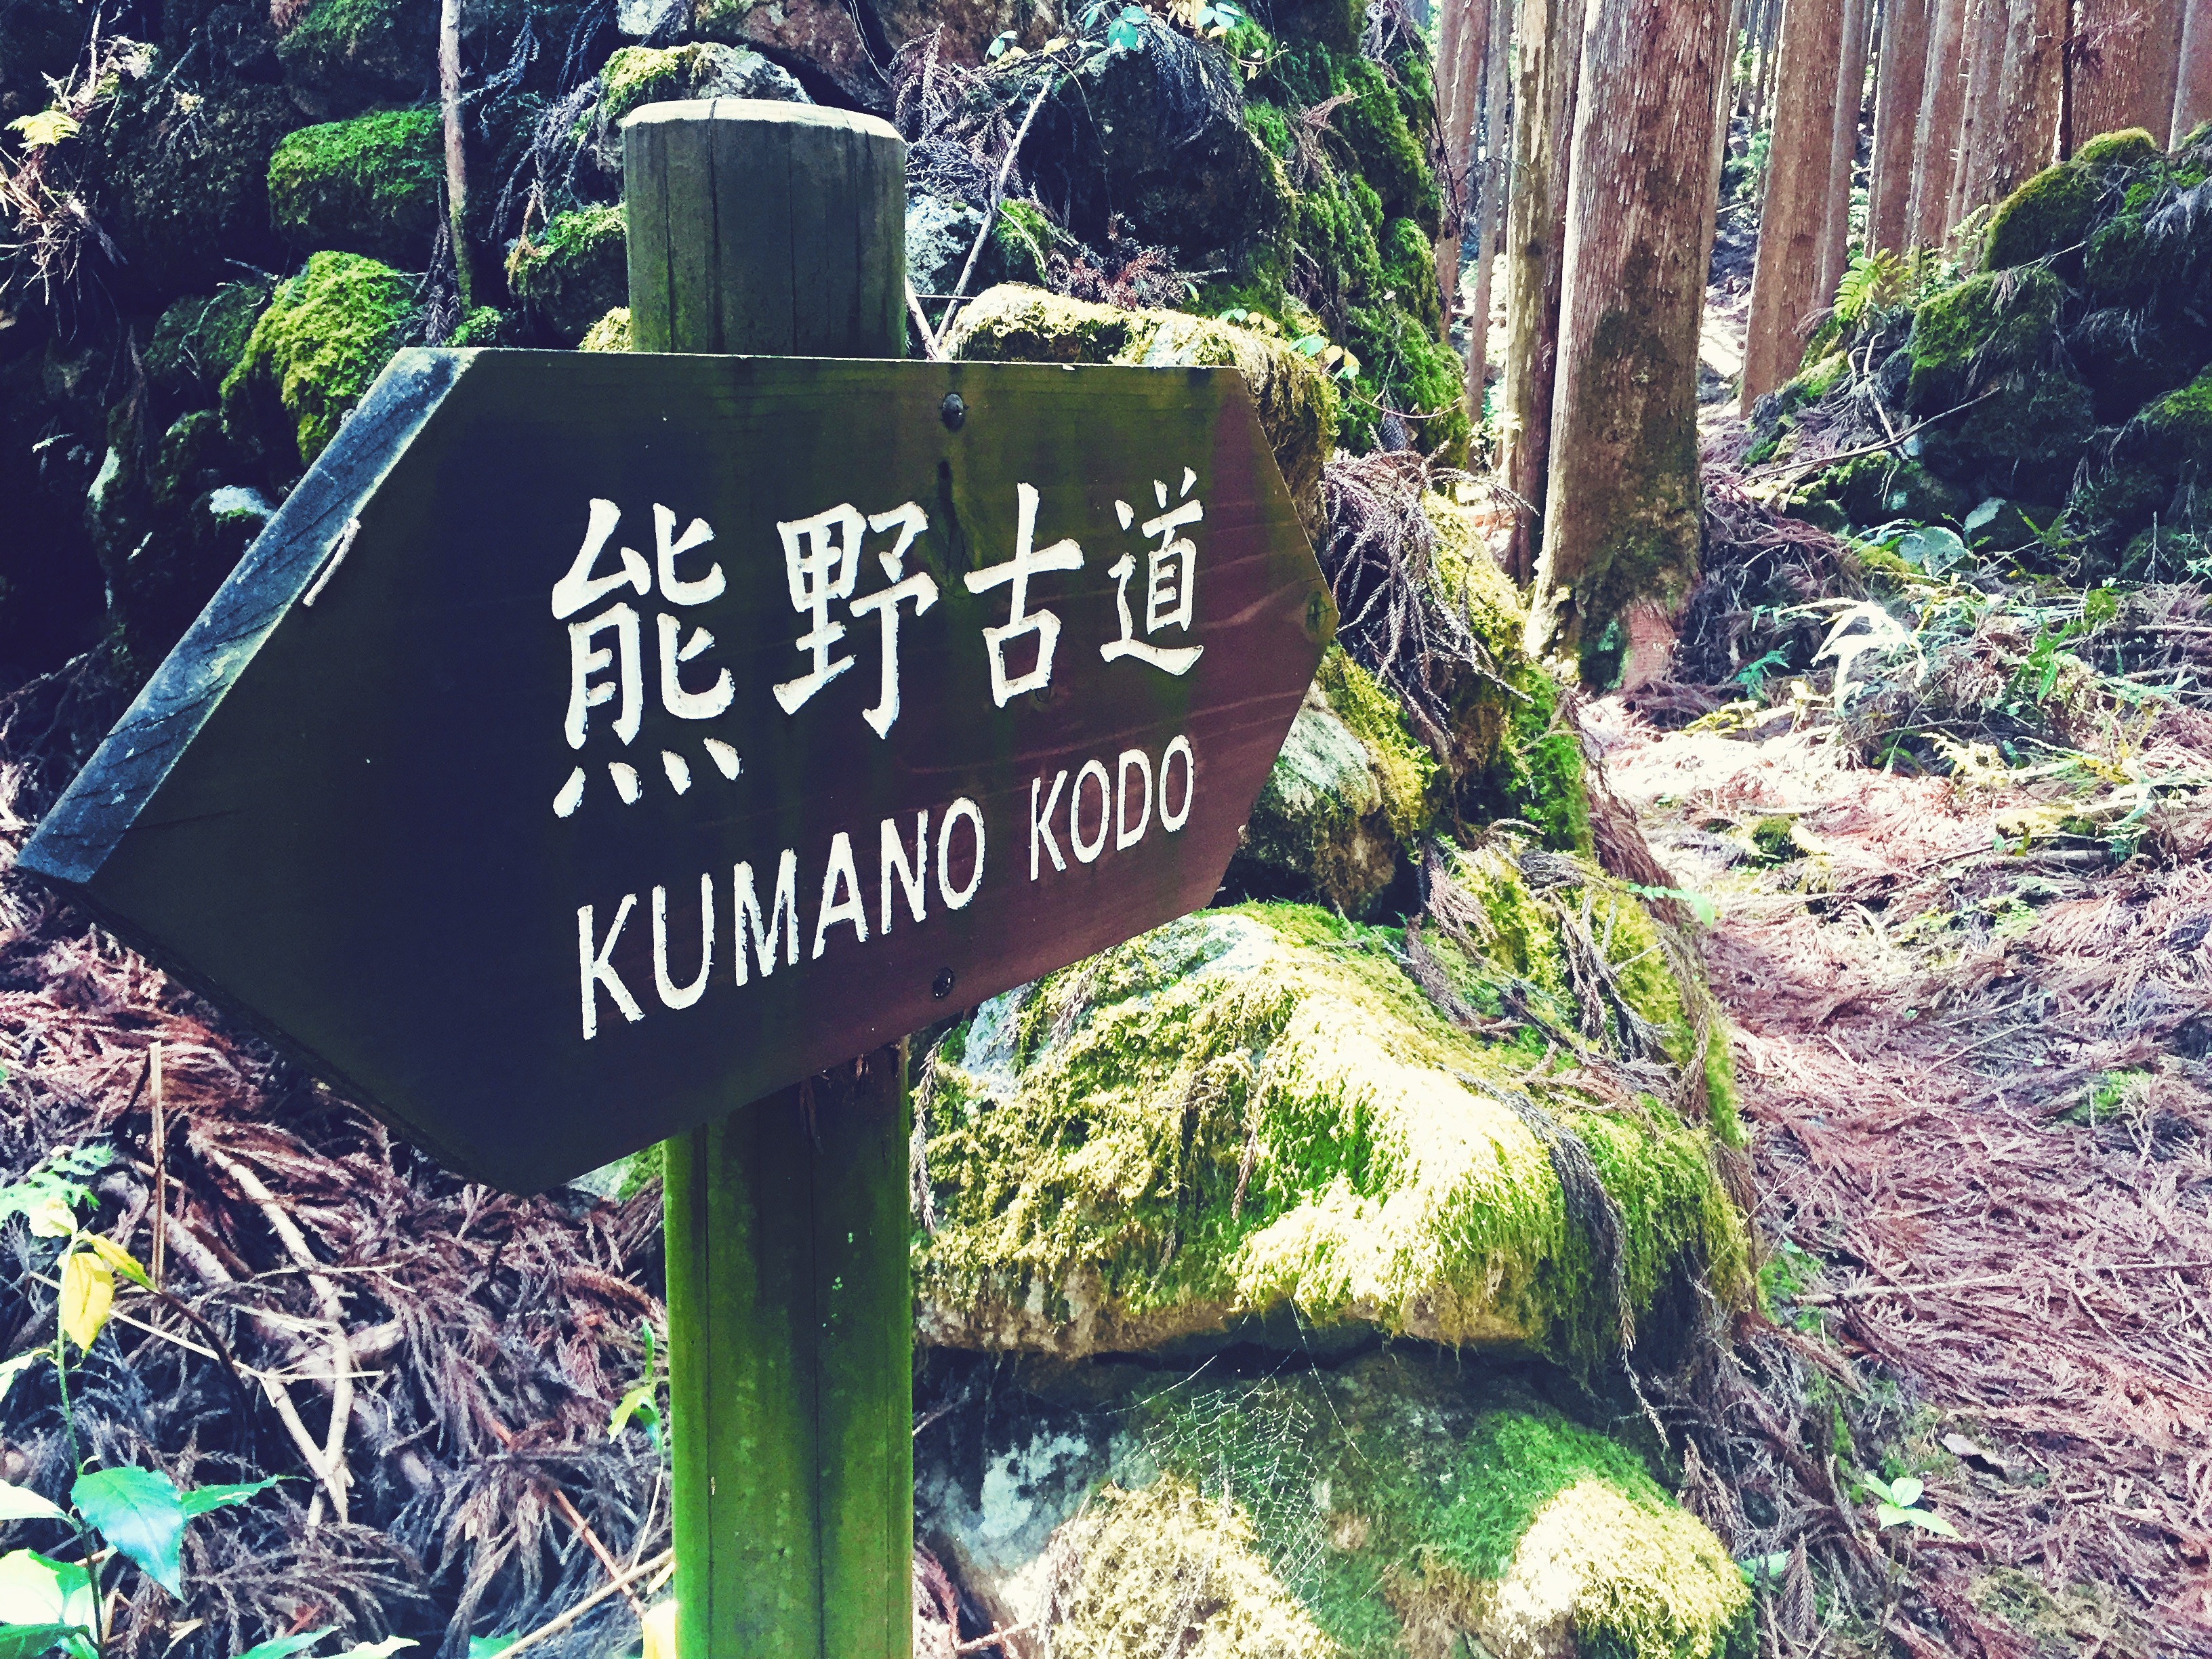 Kumano Kodo Hiking